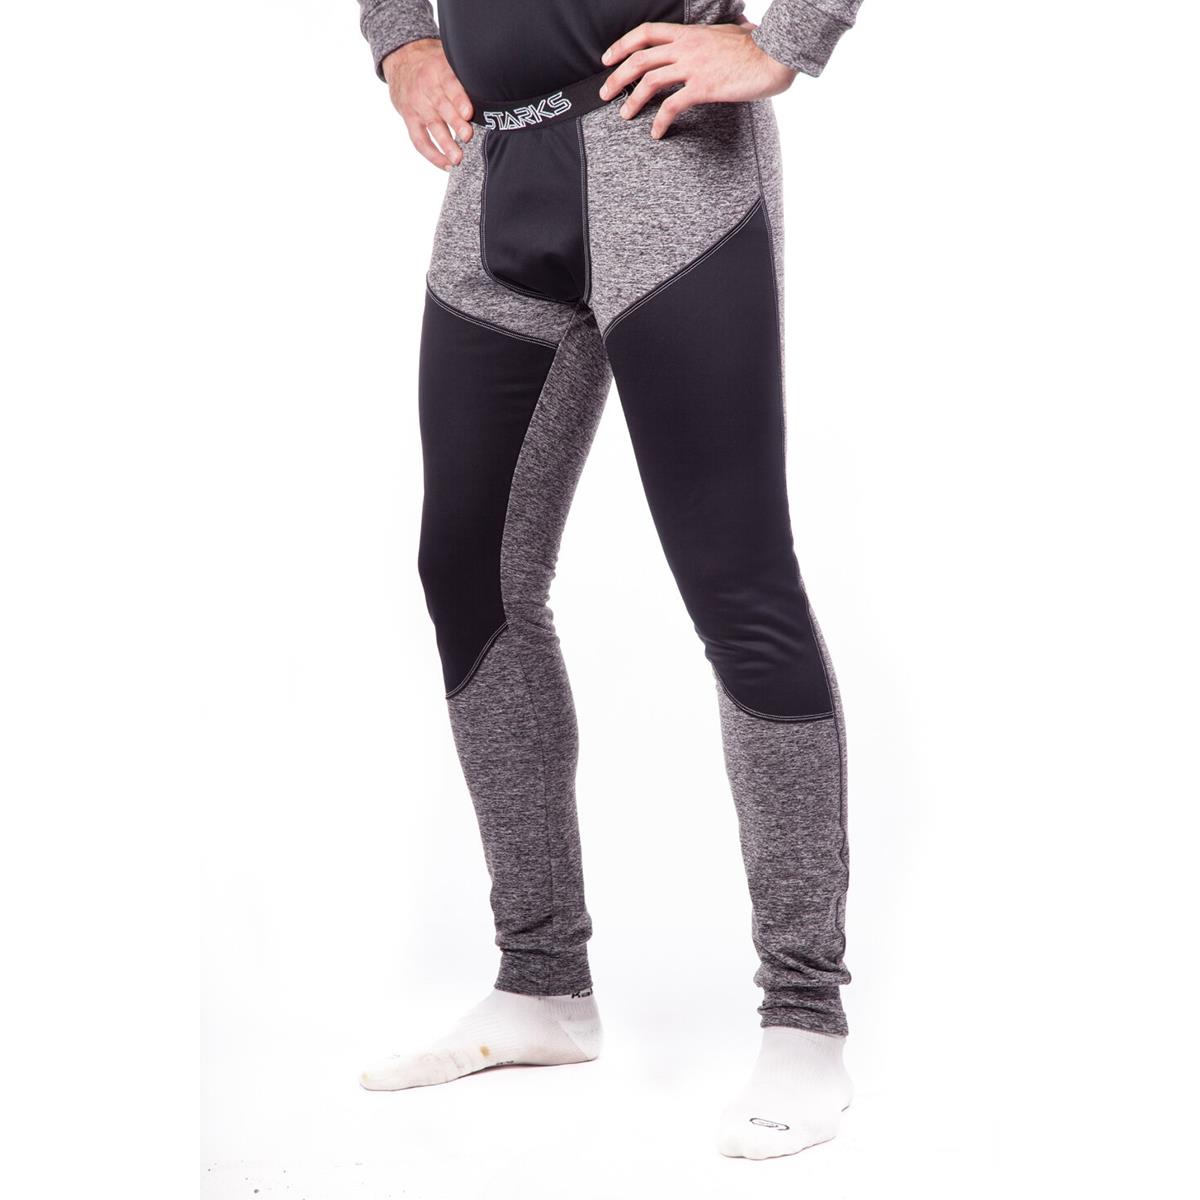 Брюки WARM Long pants Extreme Starks дет термобелье спорт для девочек р 36